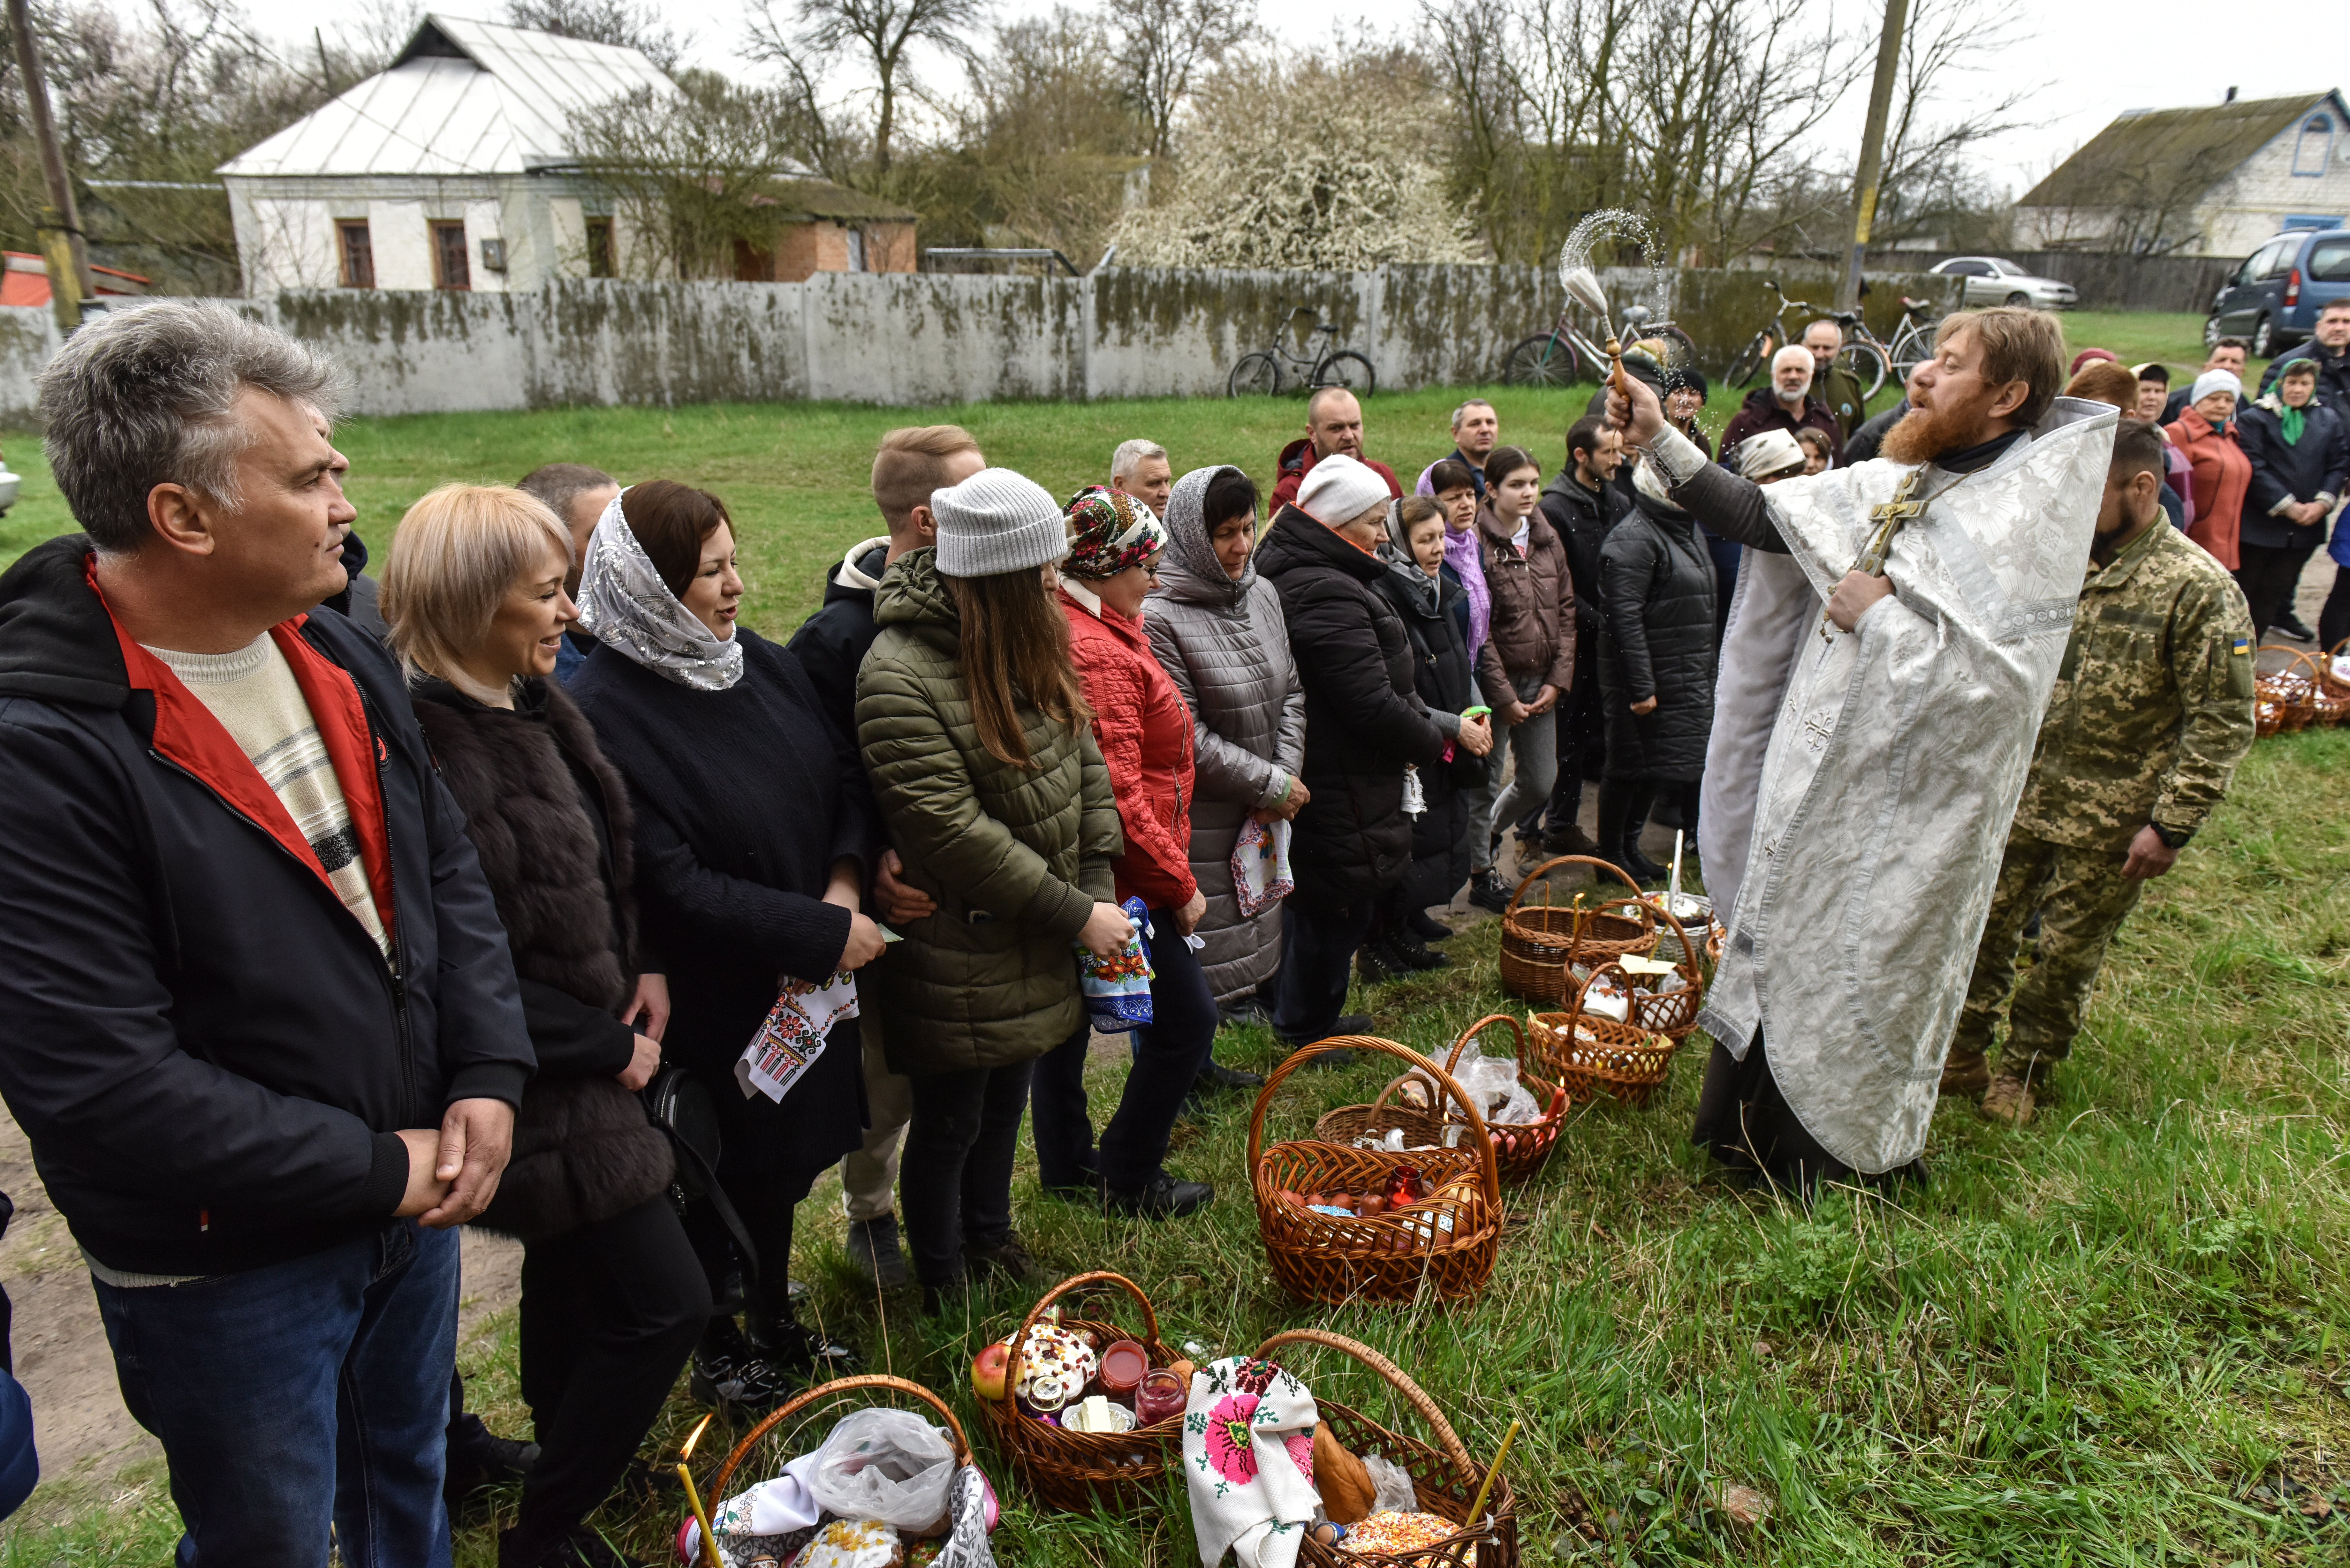 Europa sanciona al jefe de la Iglesia ortodoxa rusa por la guerra en Ucrania